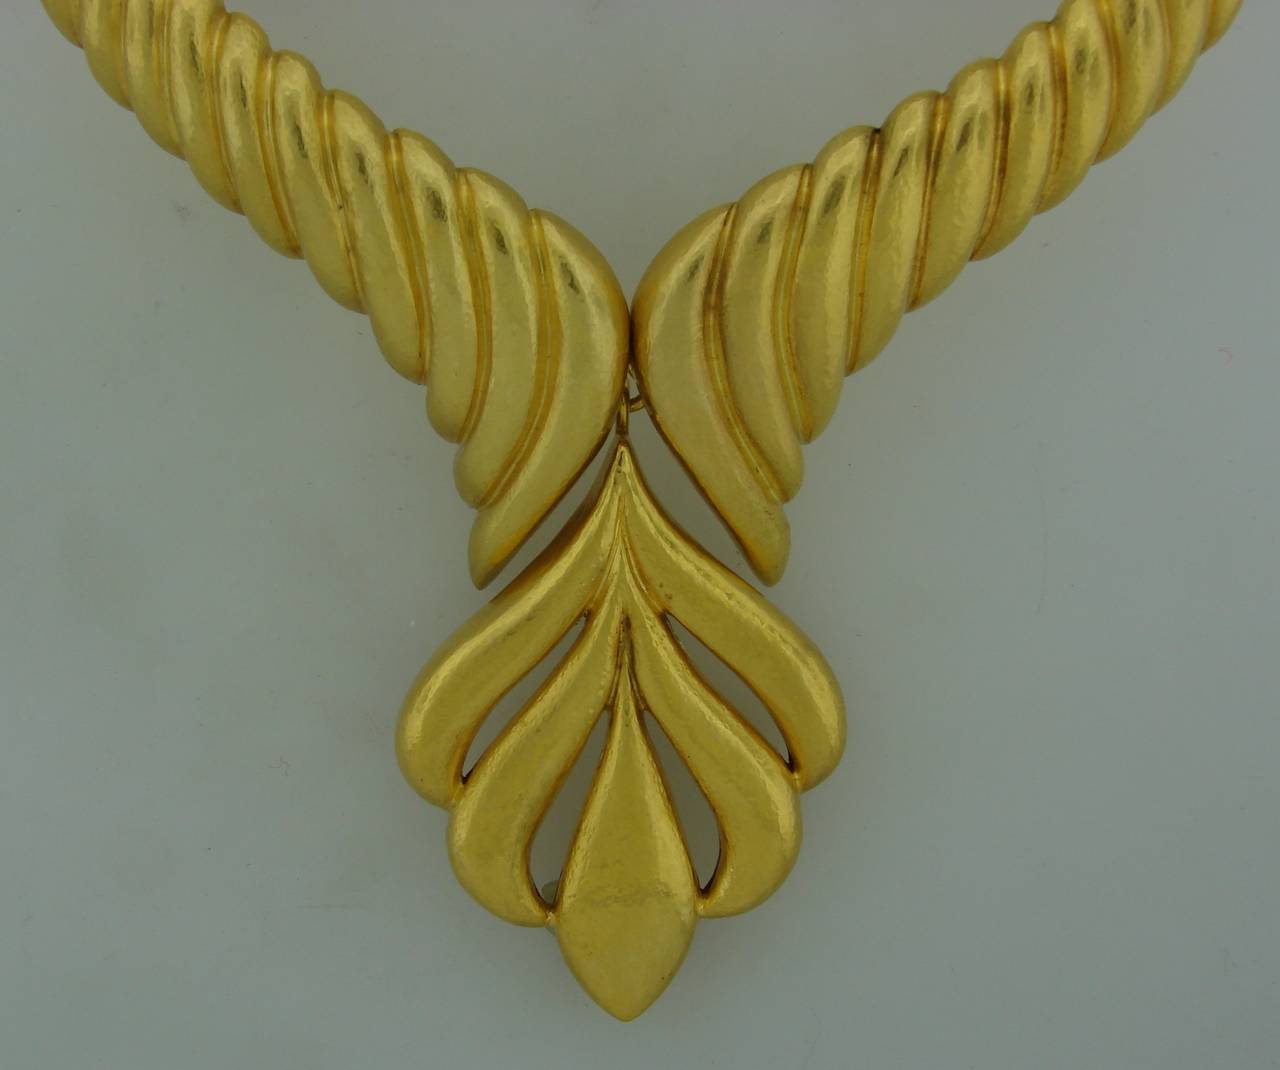 Zolotas Yellow Gold Necklace 2